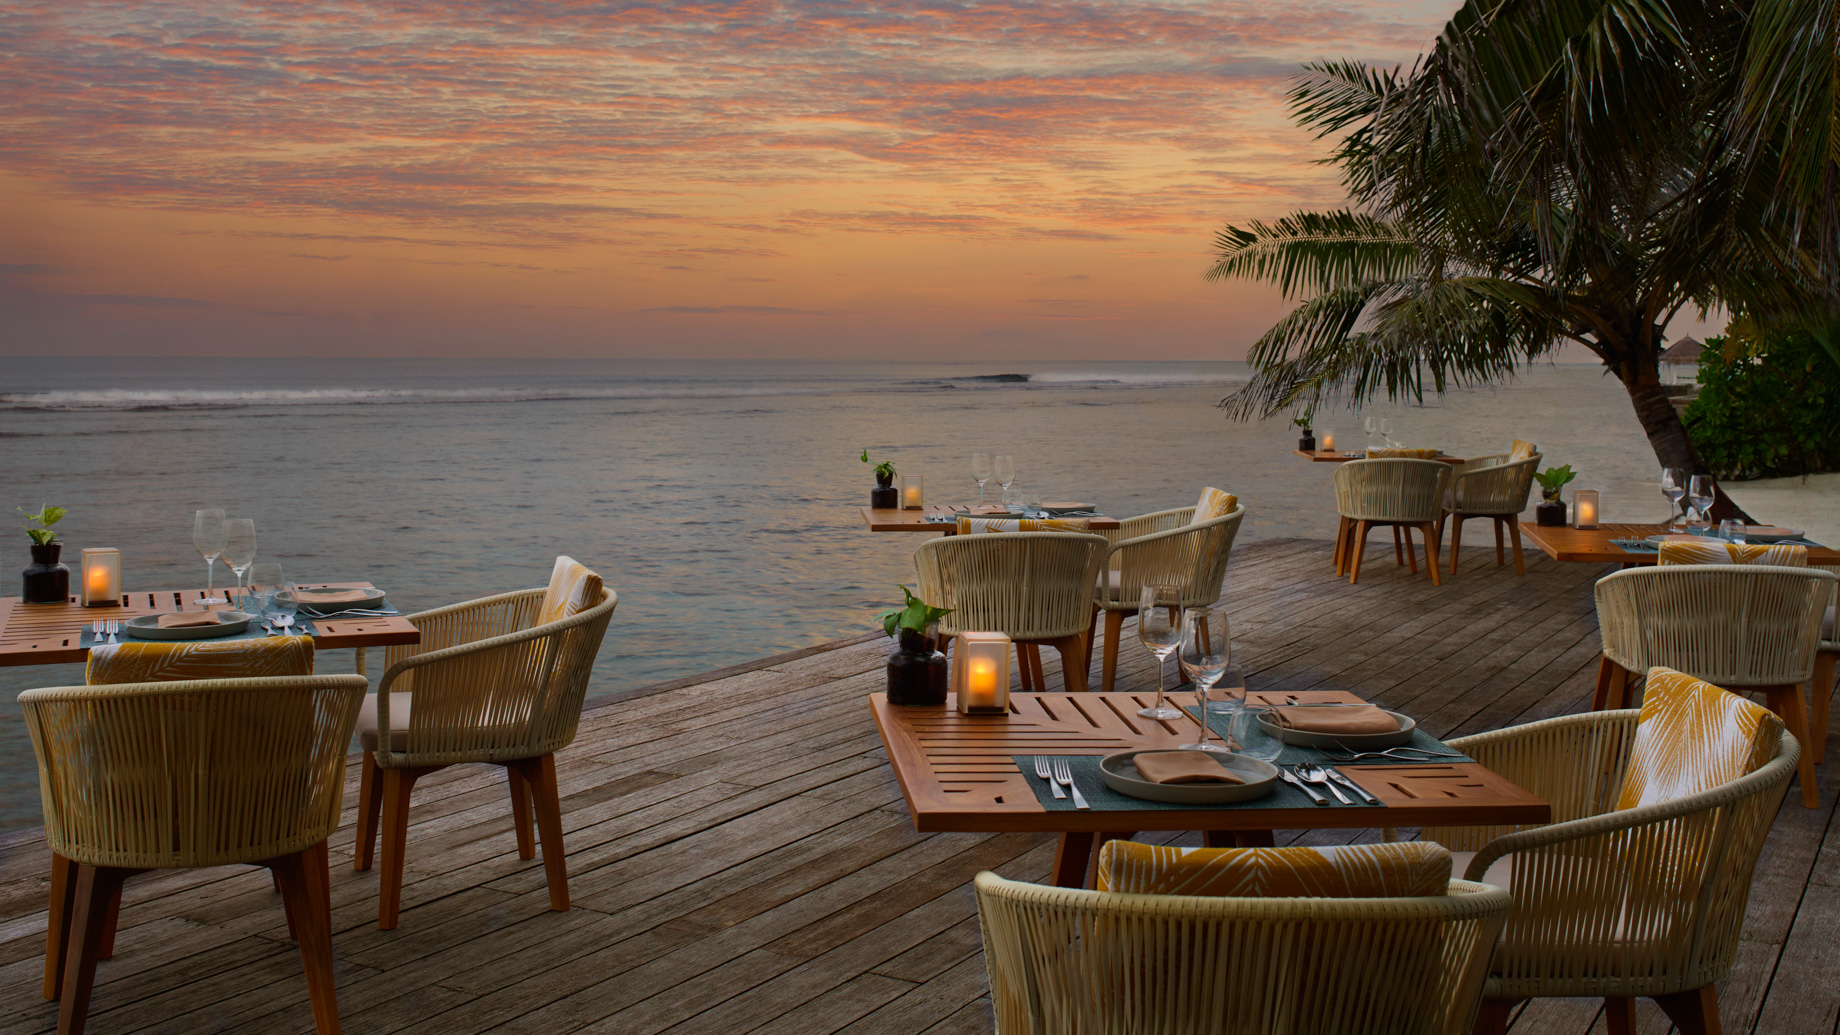 Anantara Veli Maldives Resort – South Male Atoll, Maldives – Cumin Restaurant Oceanfront Deck Sunset Dining